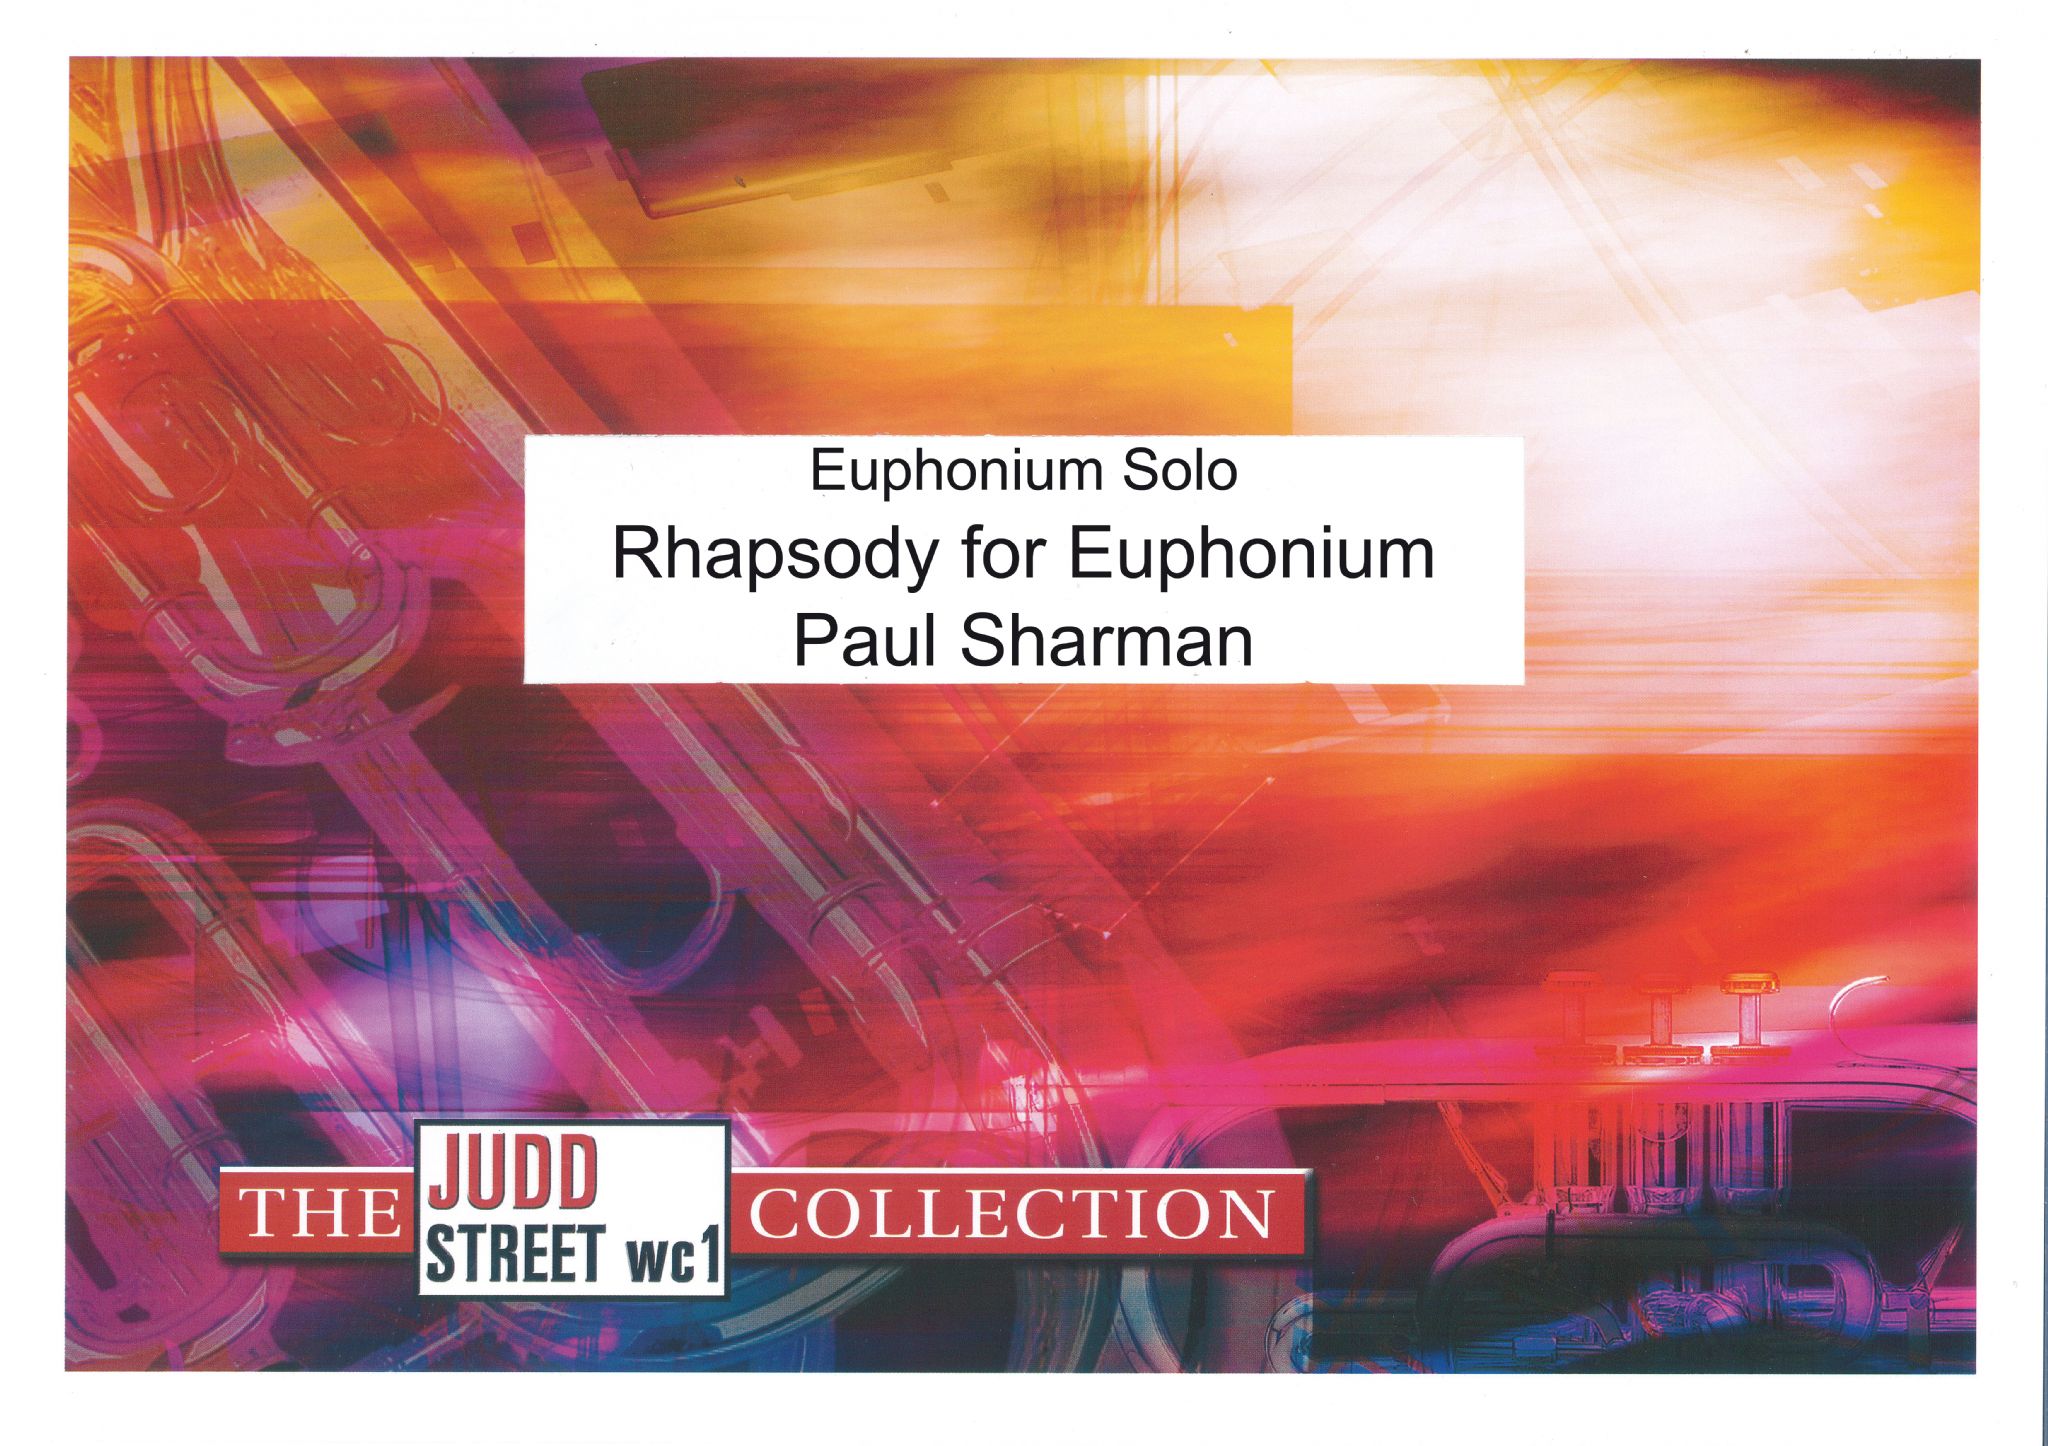 Judd: Rhapsody for Euphonium - Paul Sharman